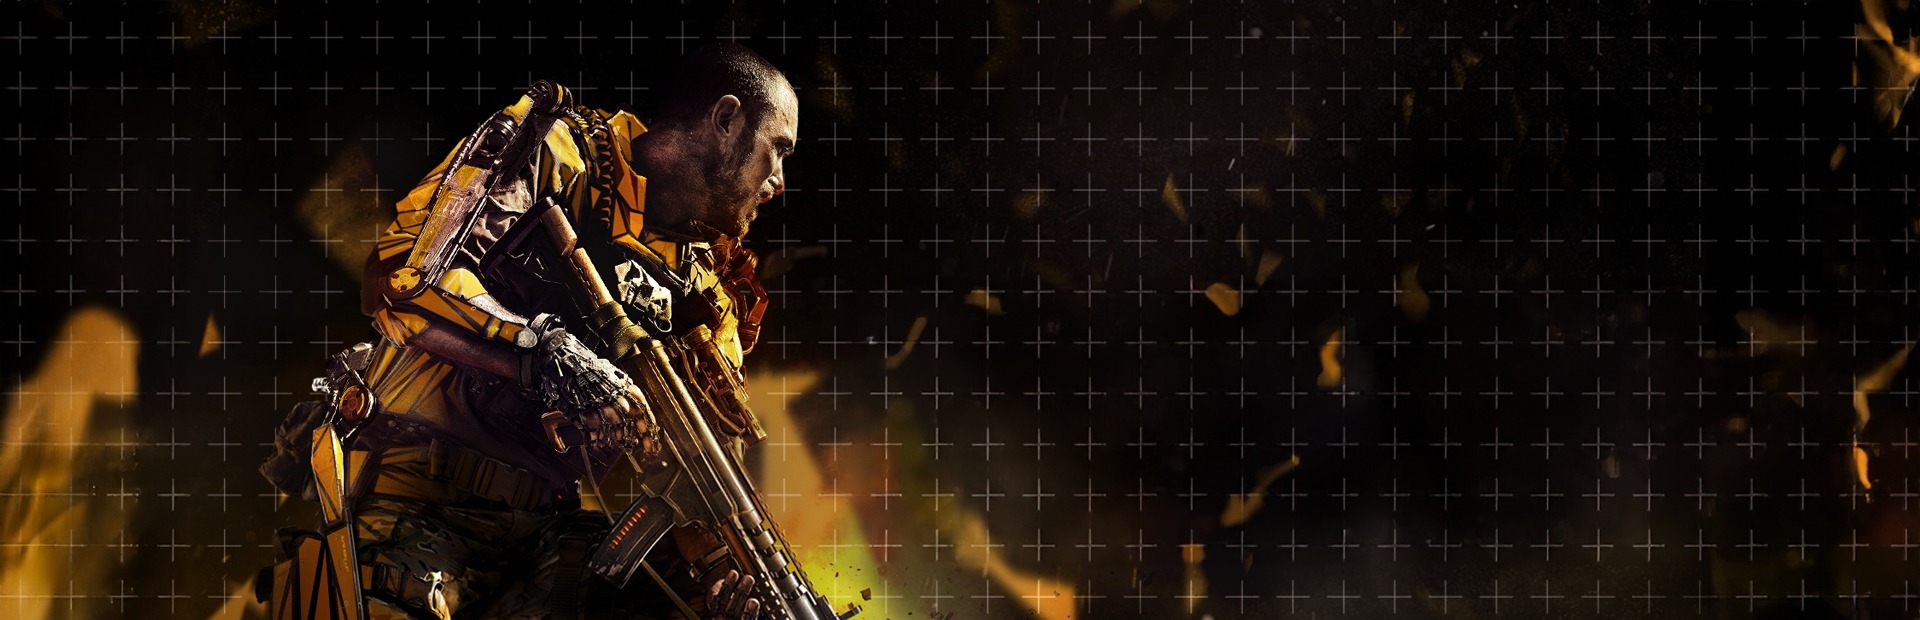 Call of duty advanced warfare системные требования. Call of Duty: Advanced Warfare - Gold Edition. Call of Duty: Advanced Warfare (2014). Advanced Warfare системные требования. Обои Мичела из коловвдюти.